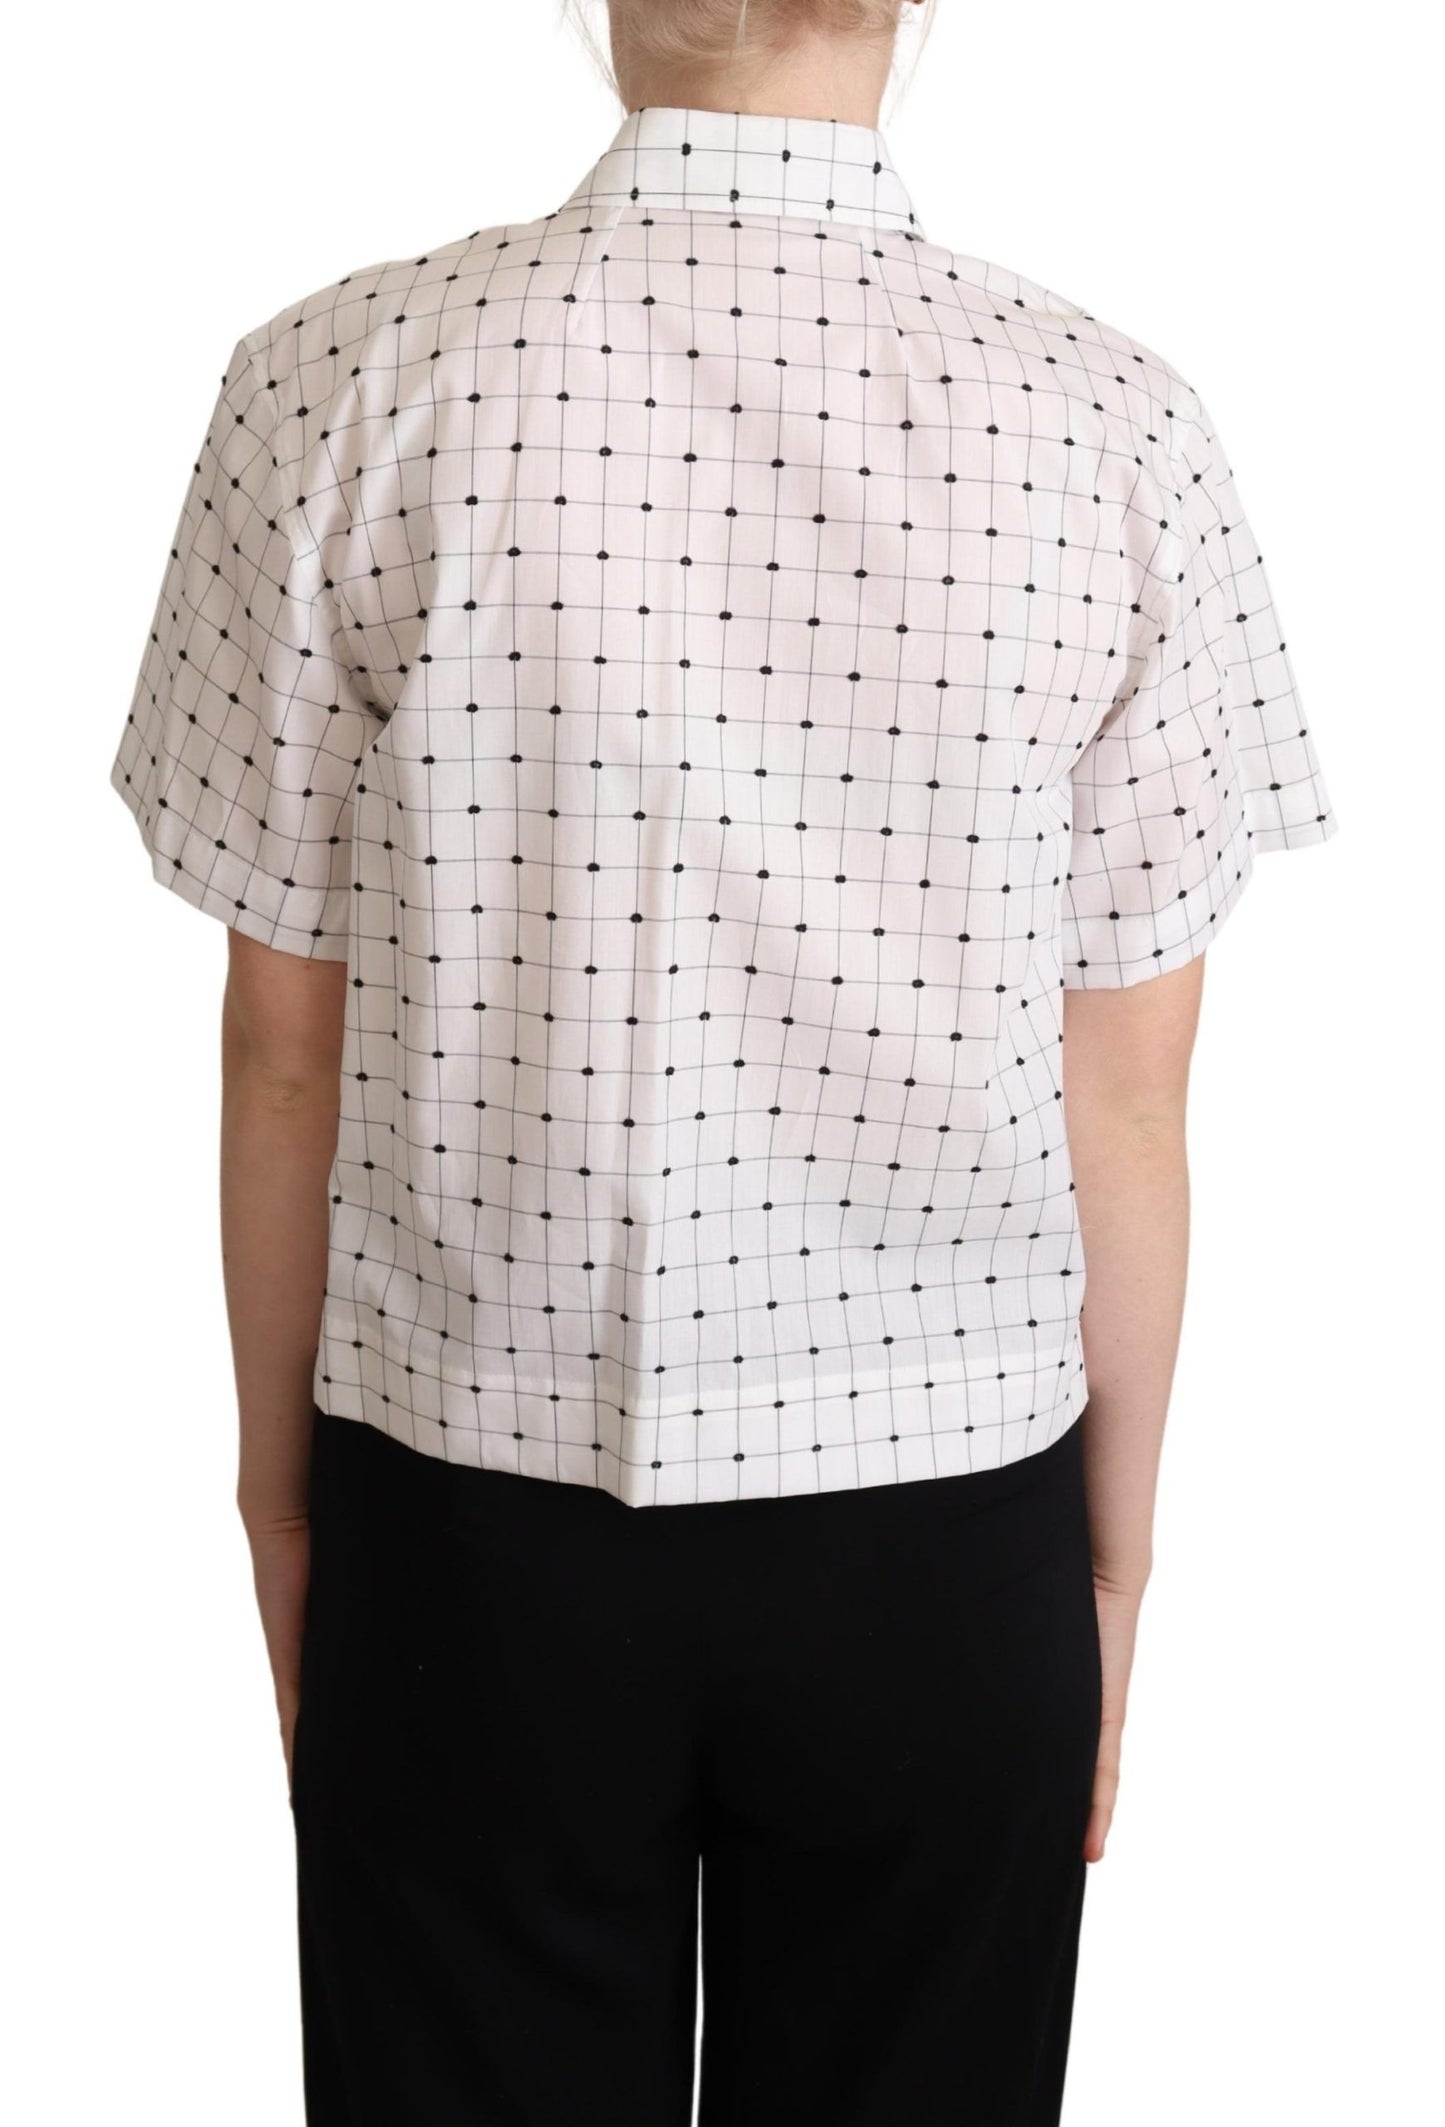 Dolce & Gabbana White Polka Dot -Baumwoll -Hemdkragen Hemd Top